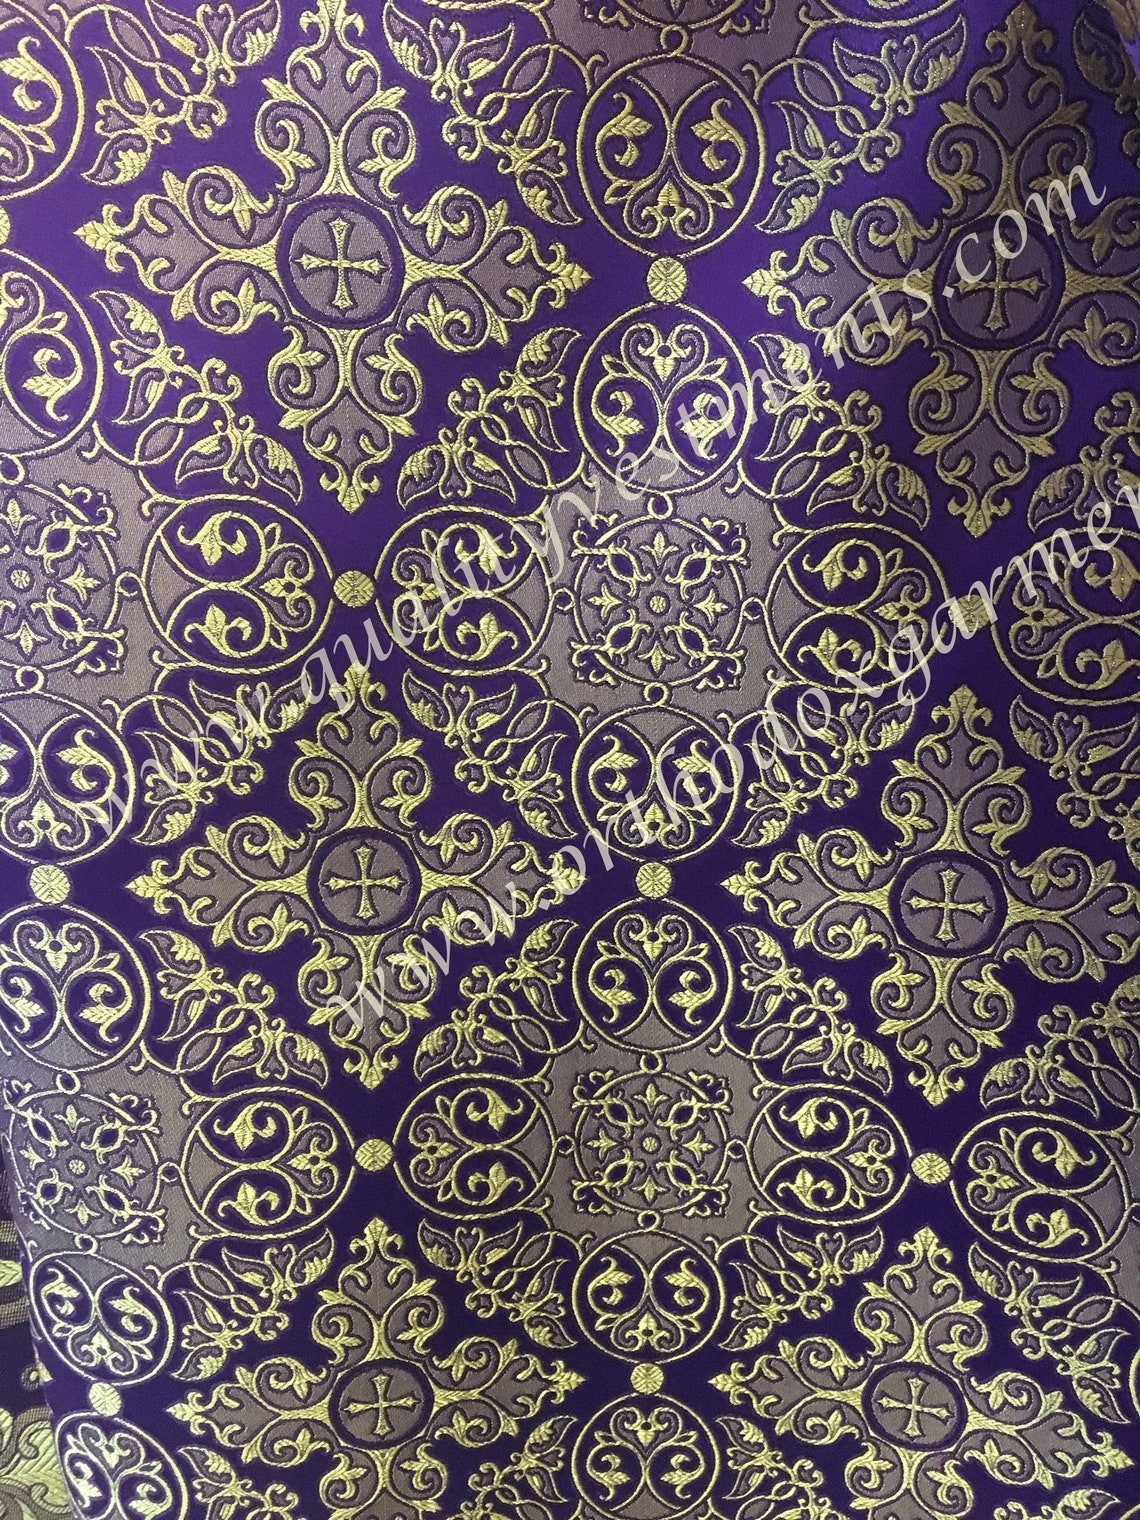 Purple Church fabric for vestments nonmetallic Cross pattern | Etsy